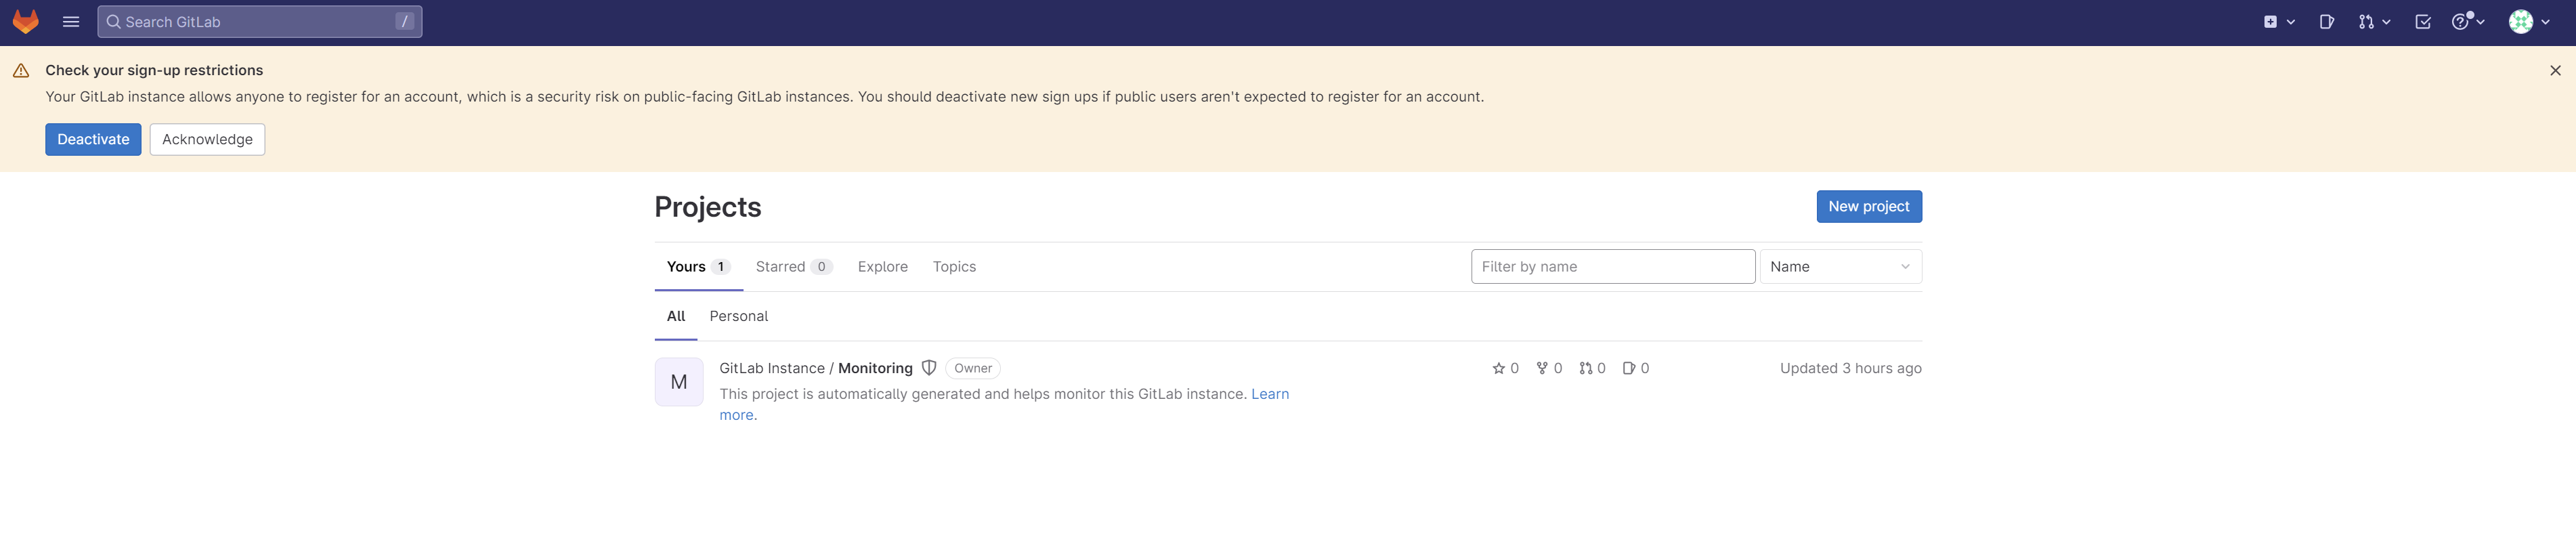 GitLab's main dashboard page